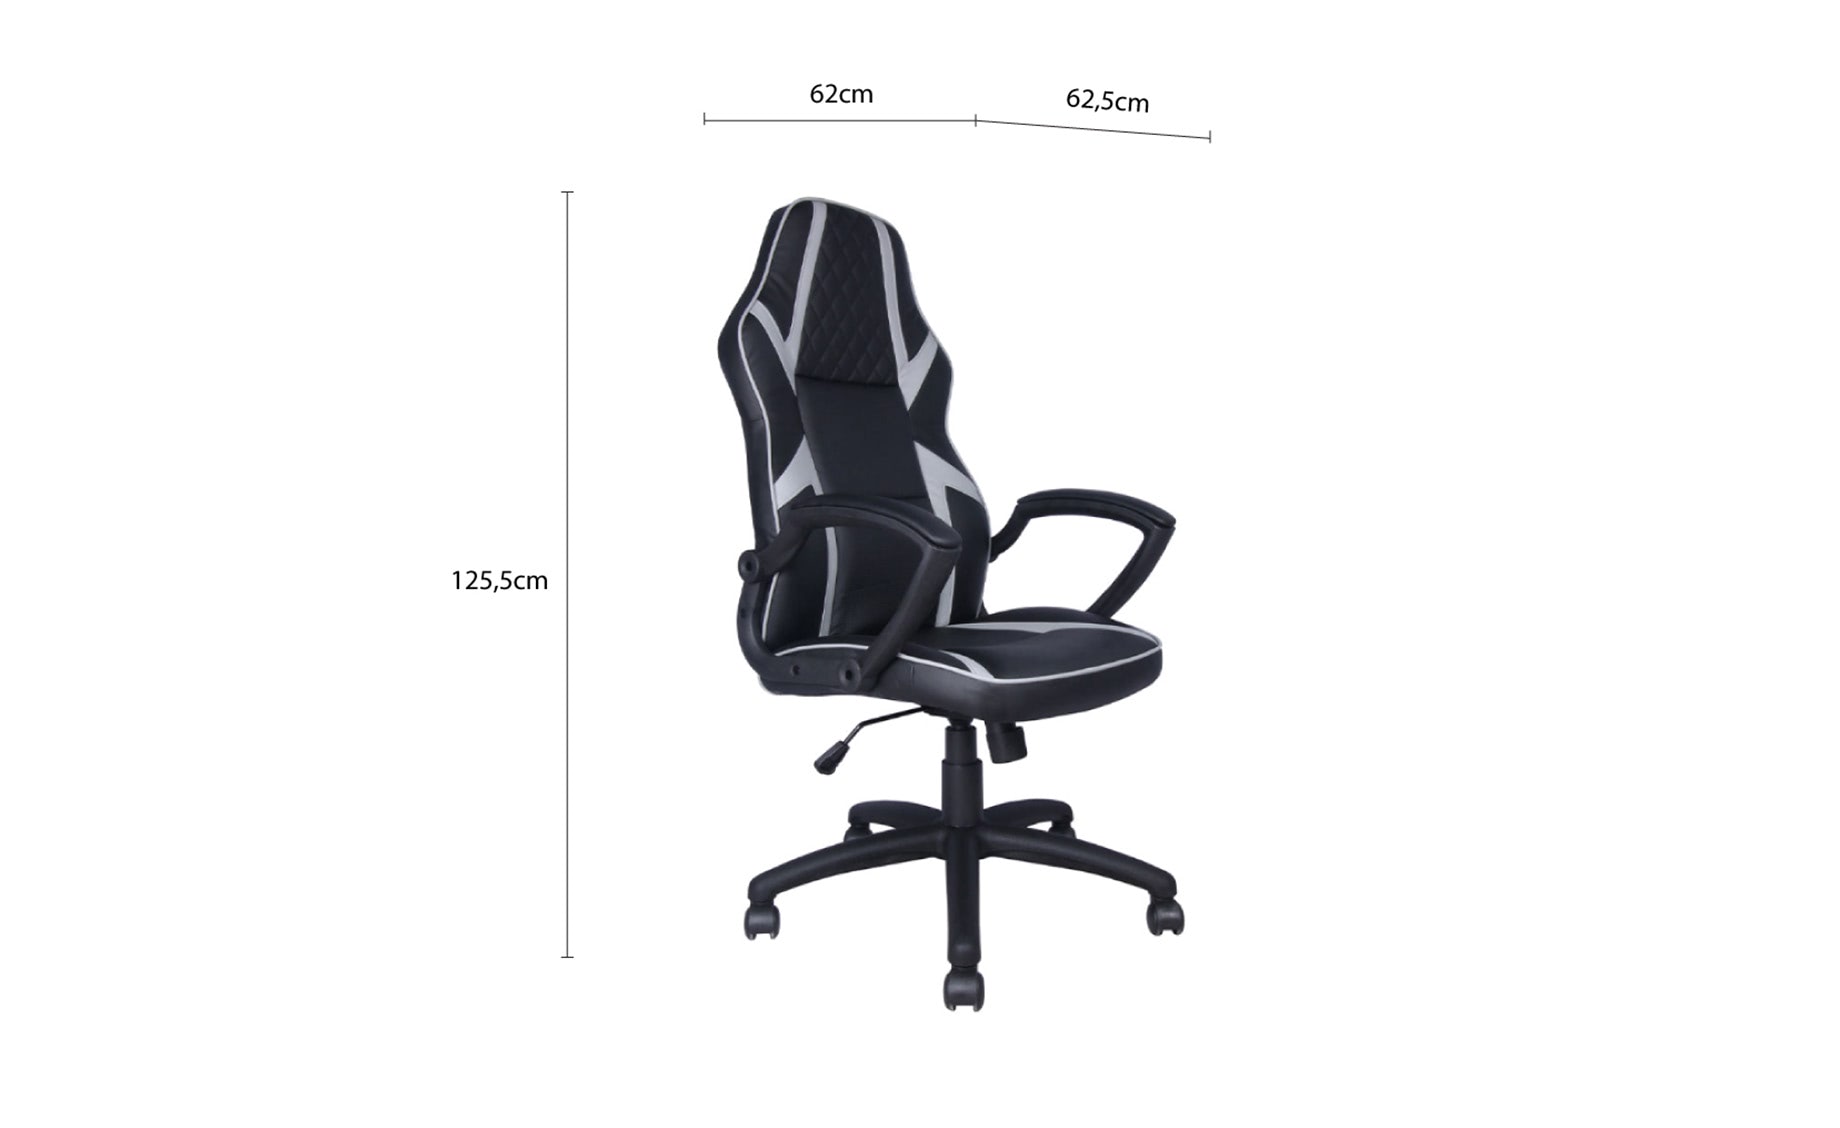 Rossa kancelarijska fotelja 62x62,5x125,5cm